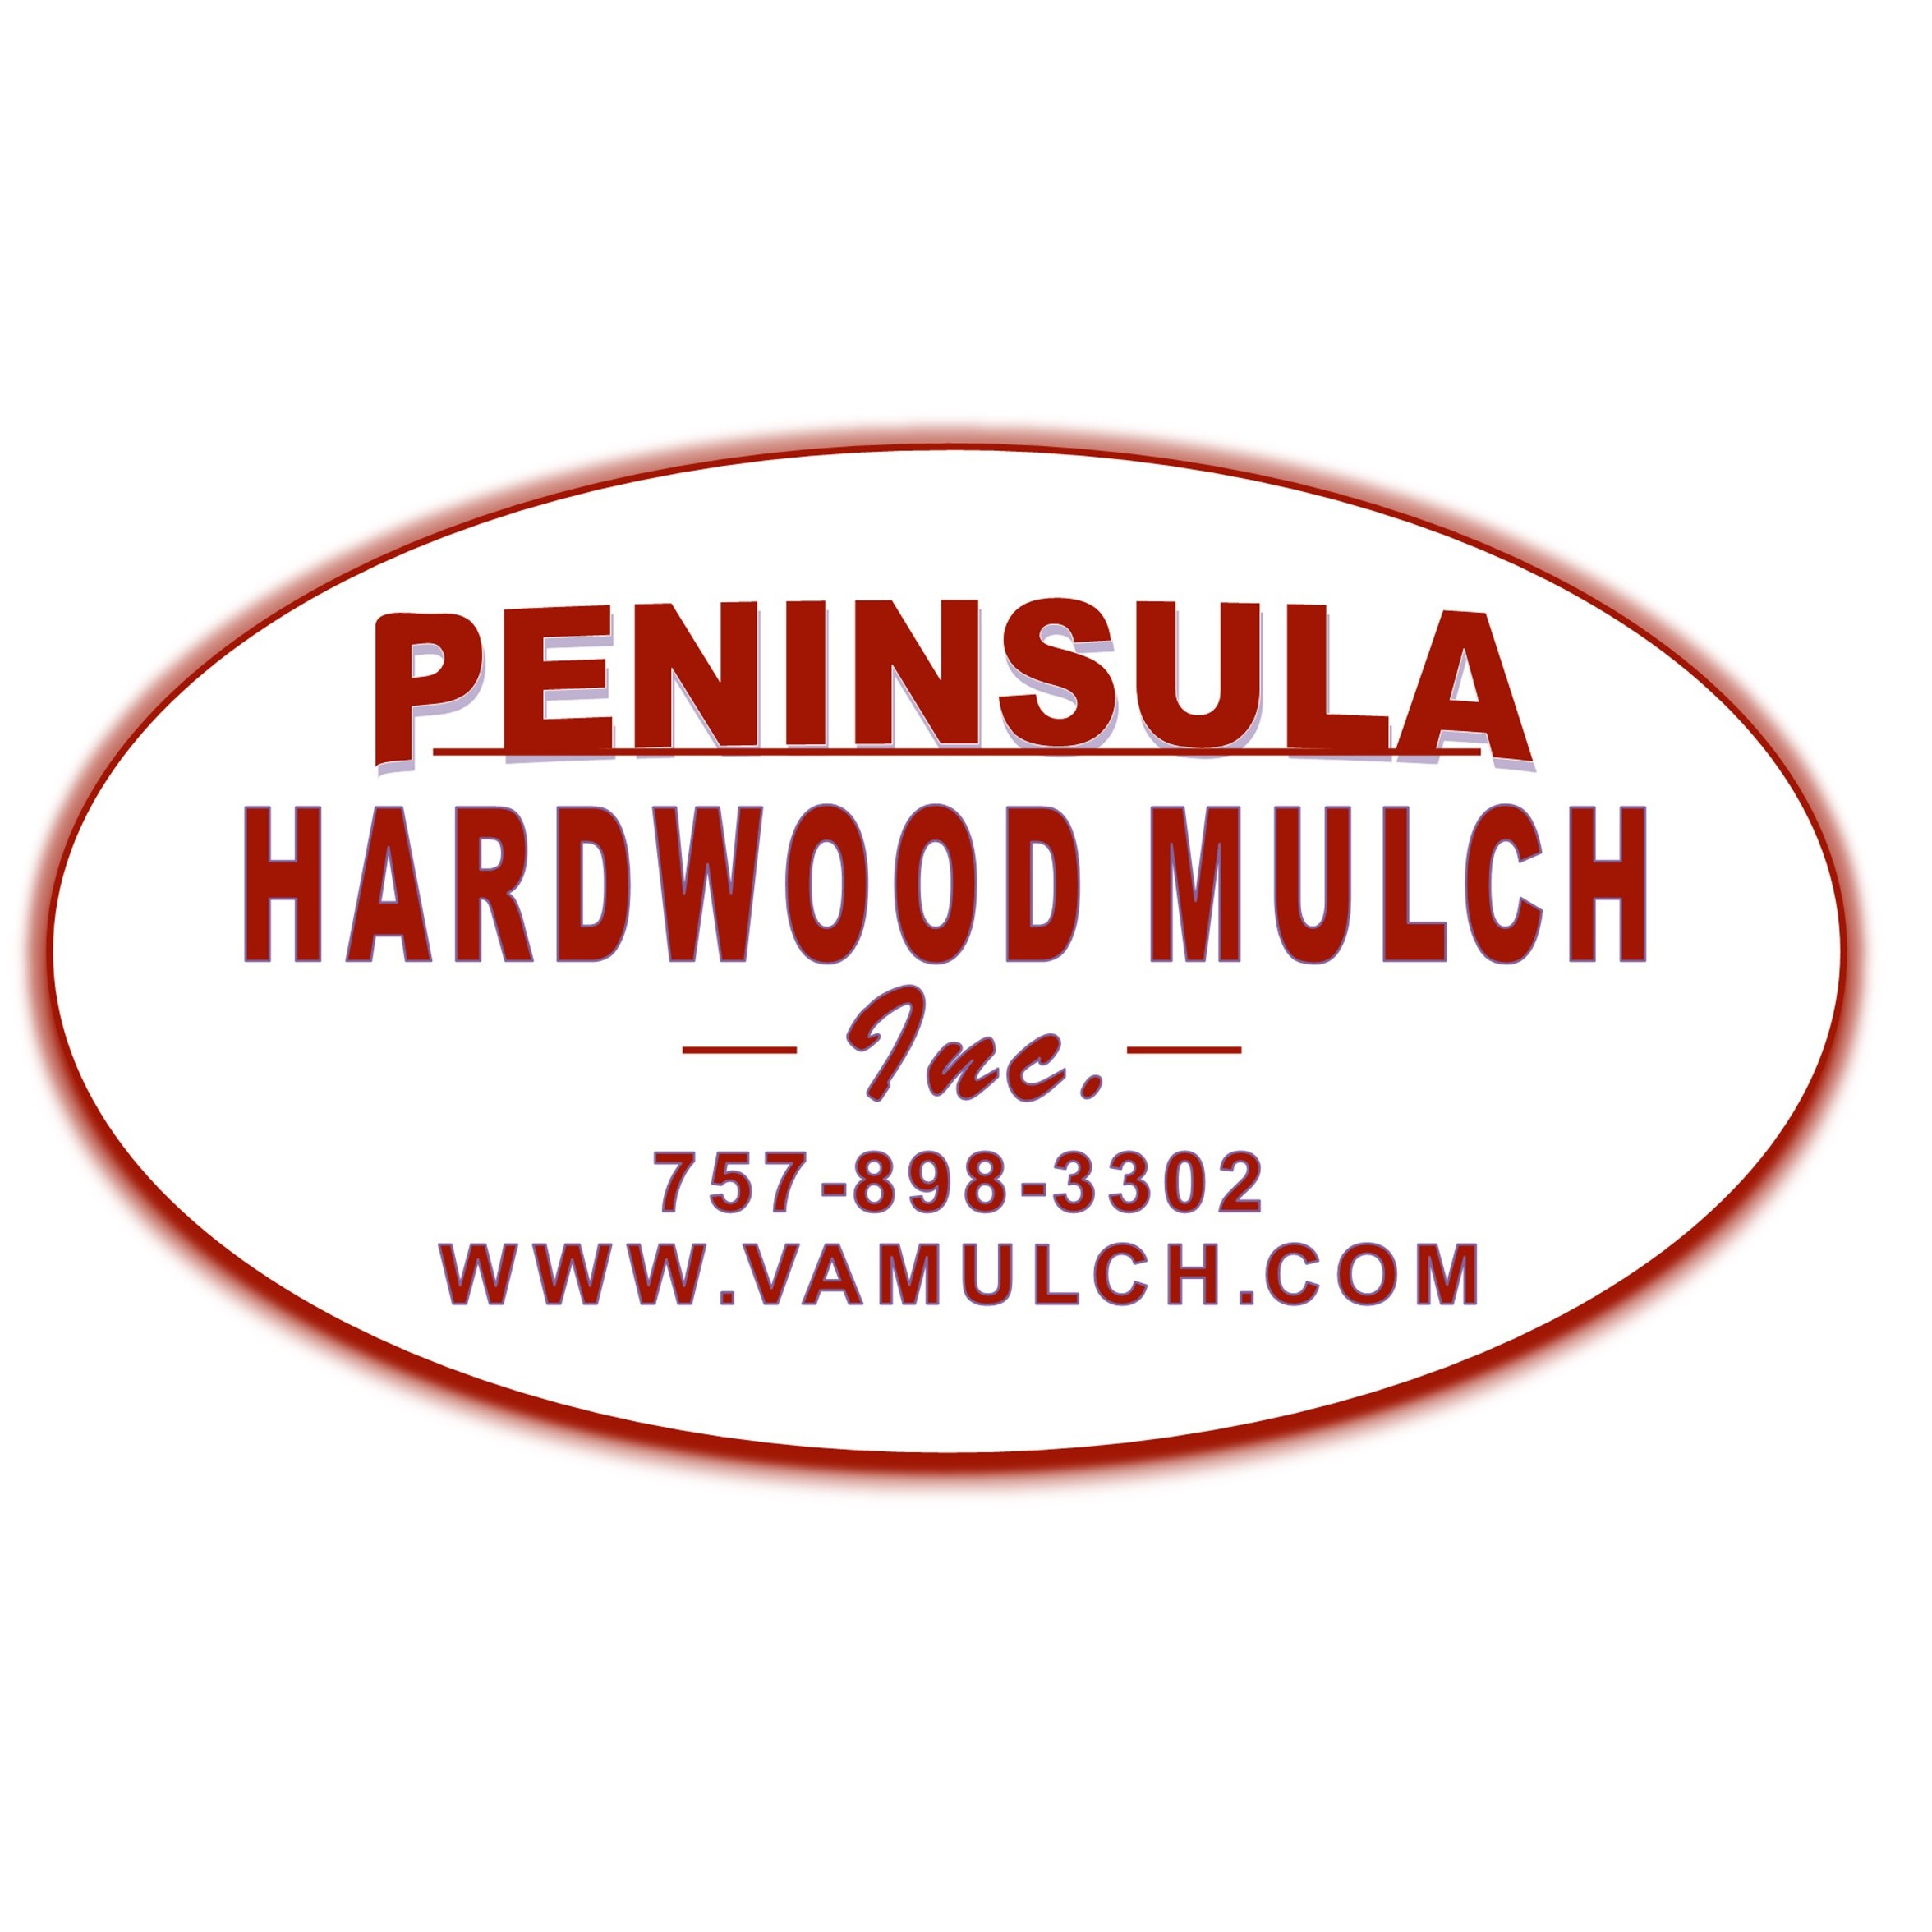 Peninsula Hardwood Mulch, Inc - Yorktown, VA 23692 - (757)898-3302 | ShowMeLocal.com